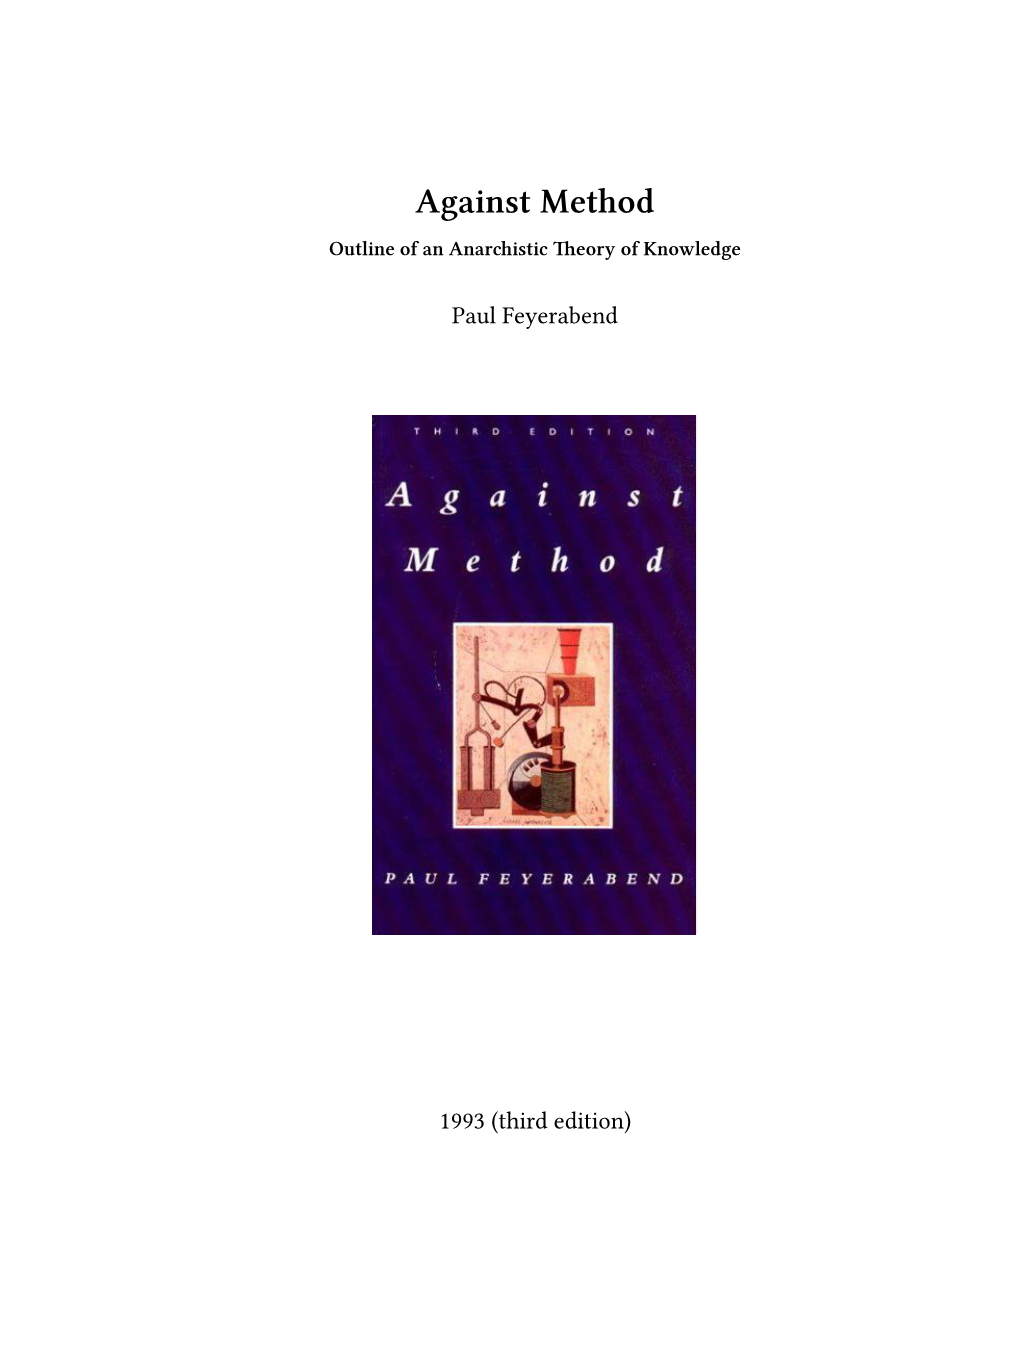 Paul-Feyerabend-Against-Method.Pdf